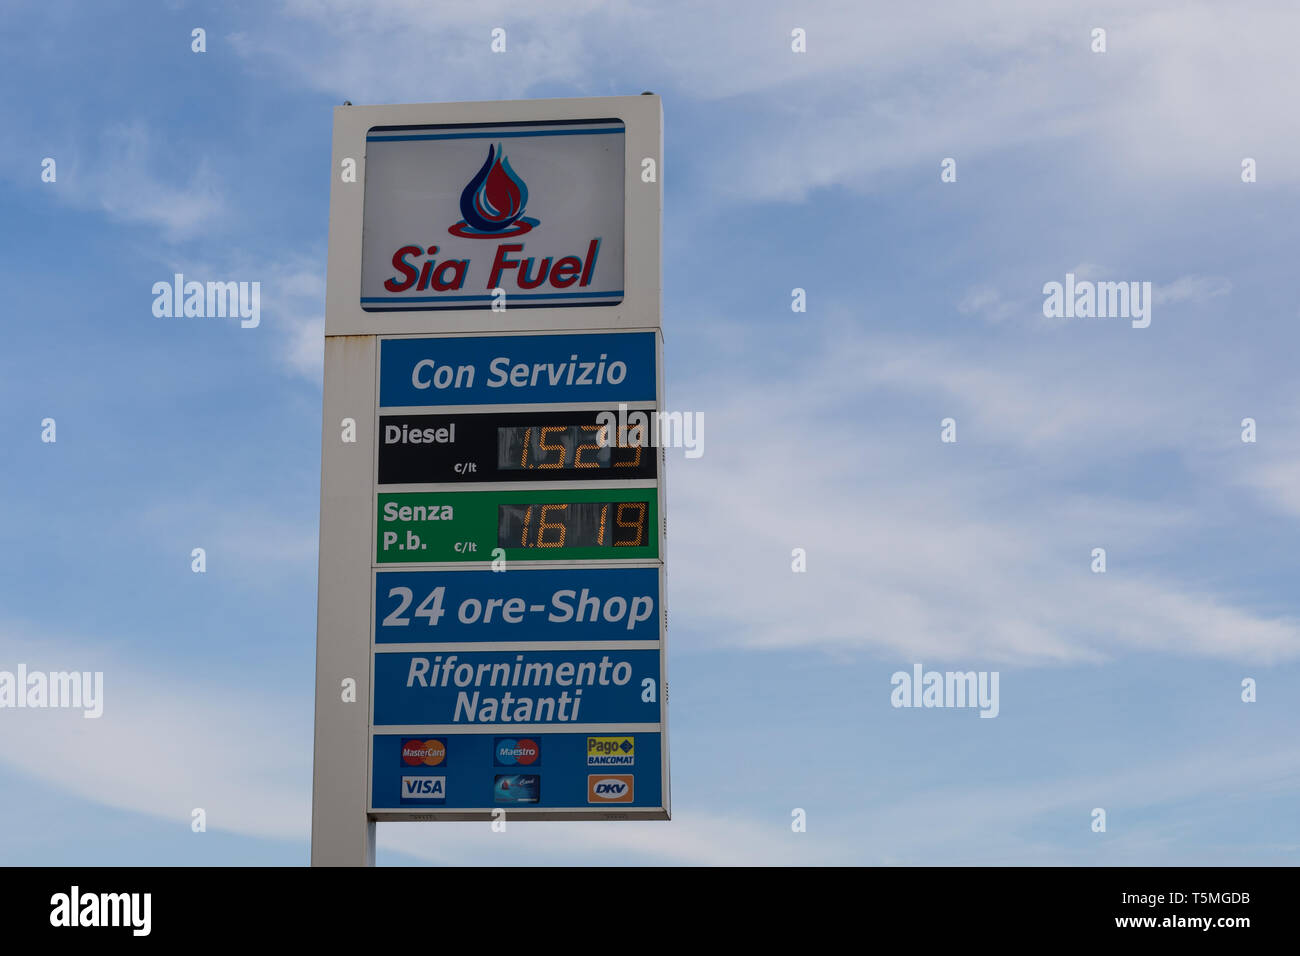 Sign at Sia Fuel petrol station, displaying fuel prices - Grado, Friuli Venezia Giulia, Italy Stock Photo